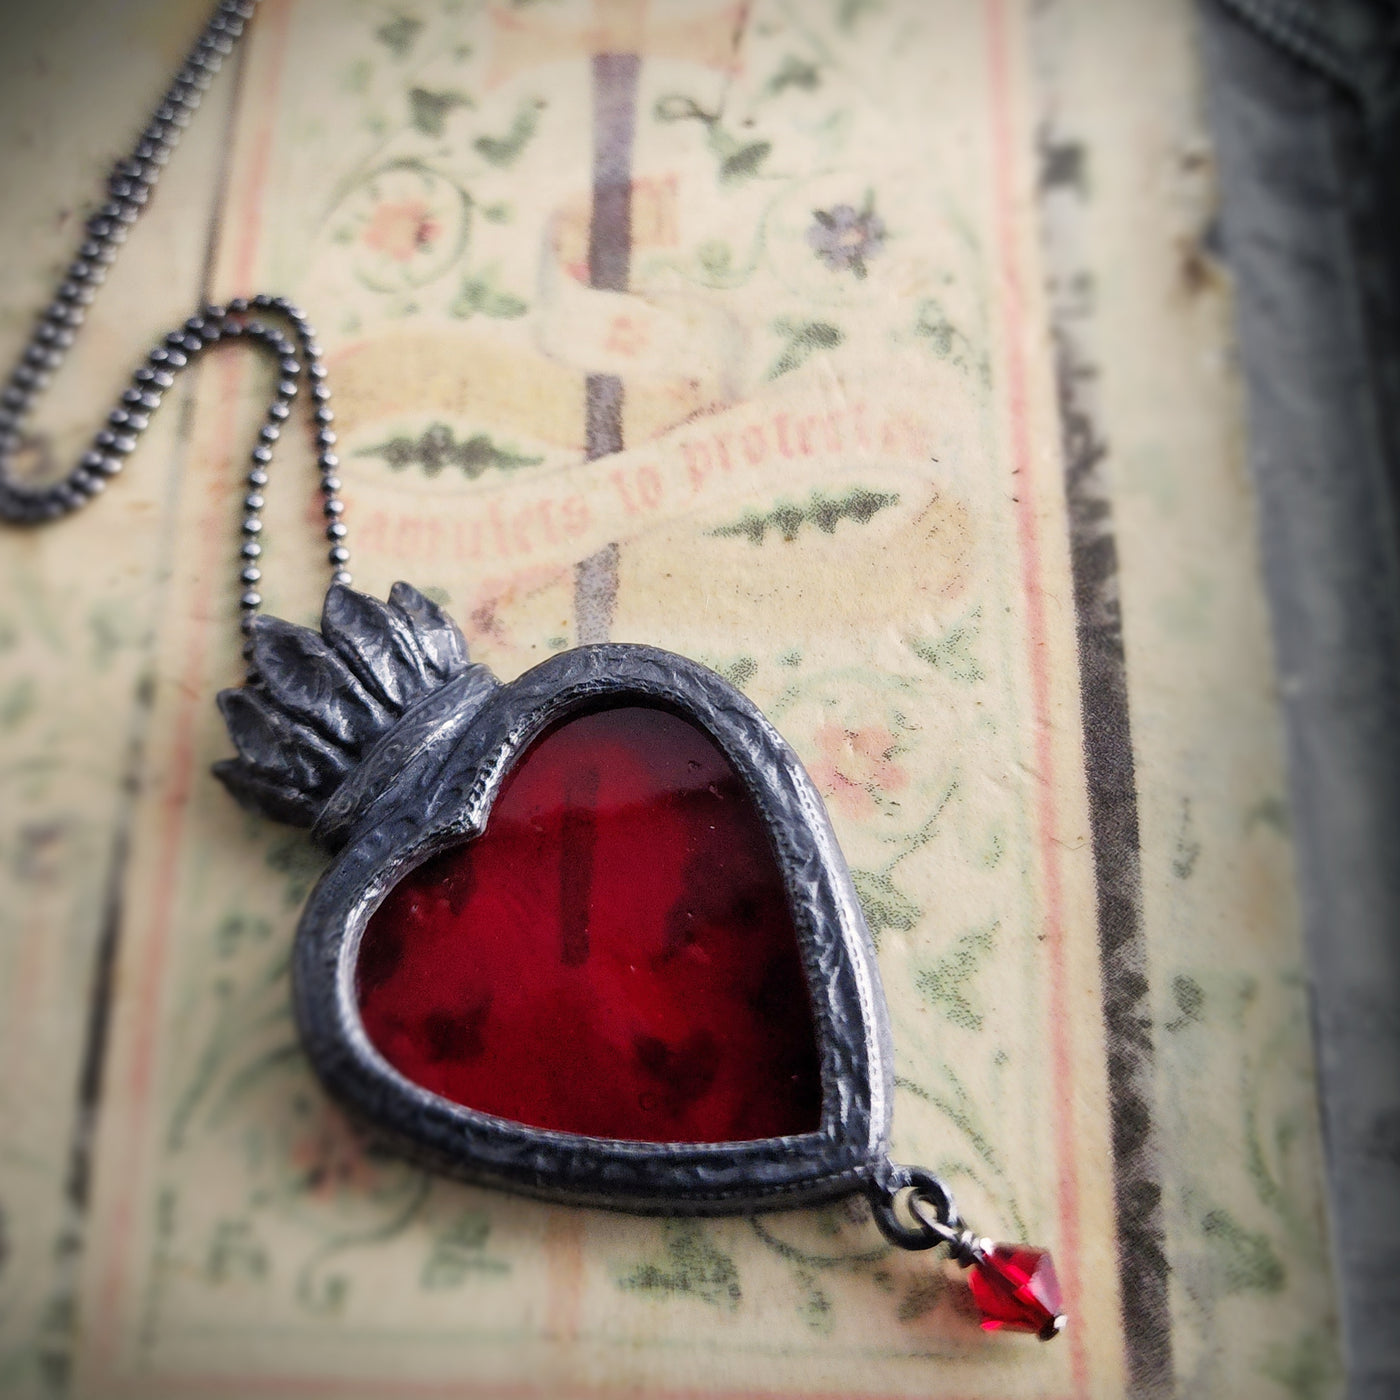 calabrum - sacred heart amulet